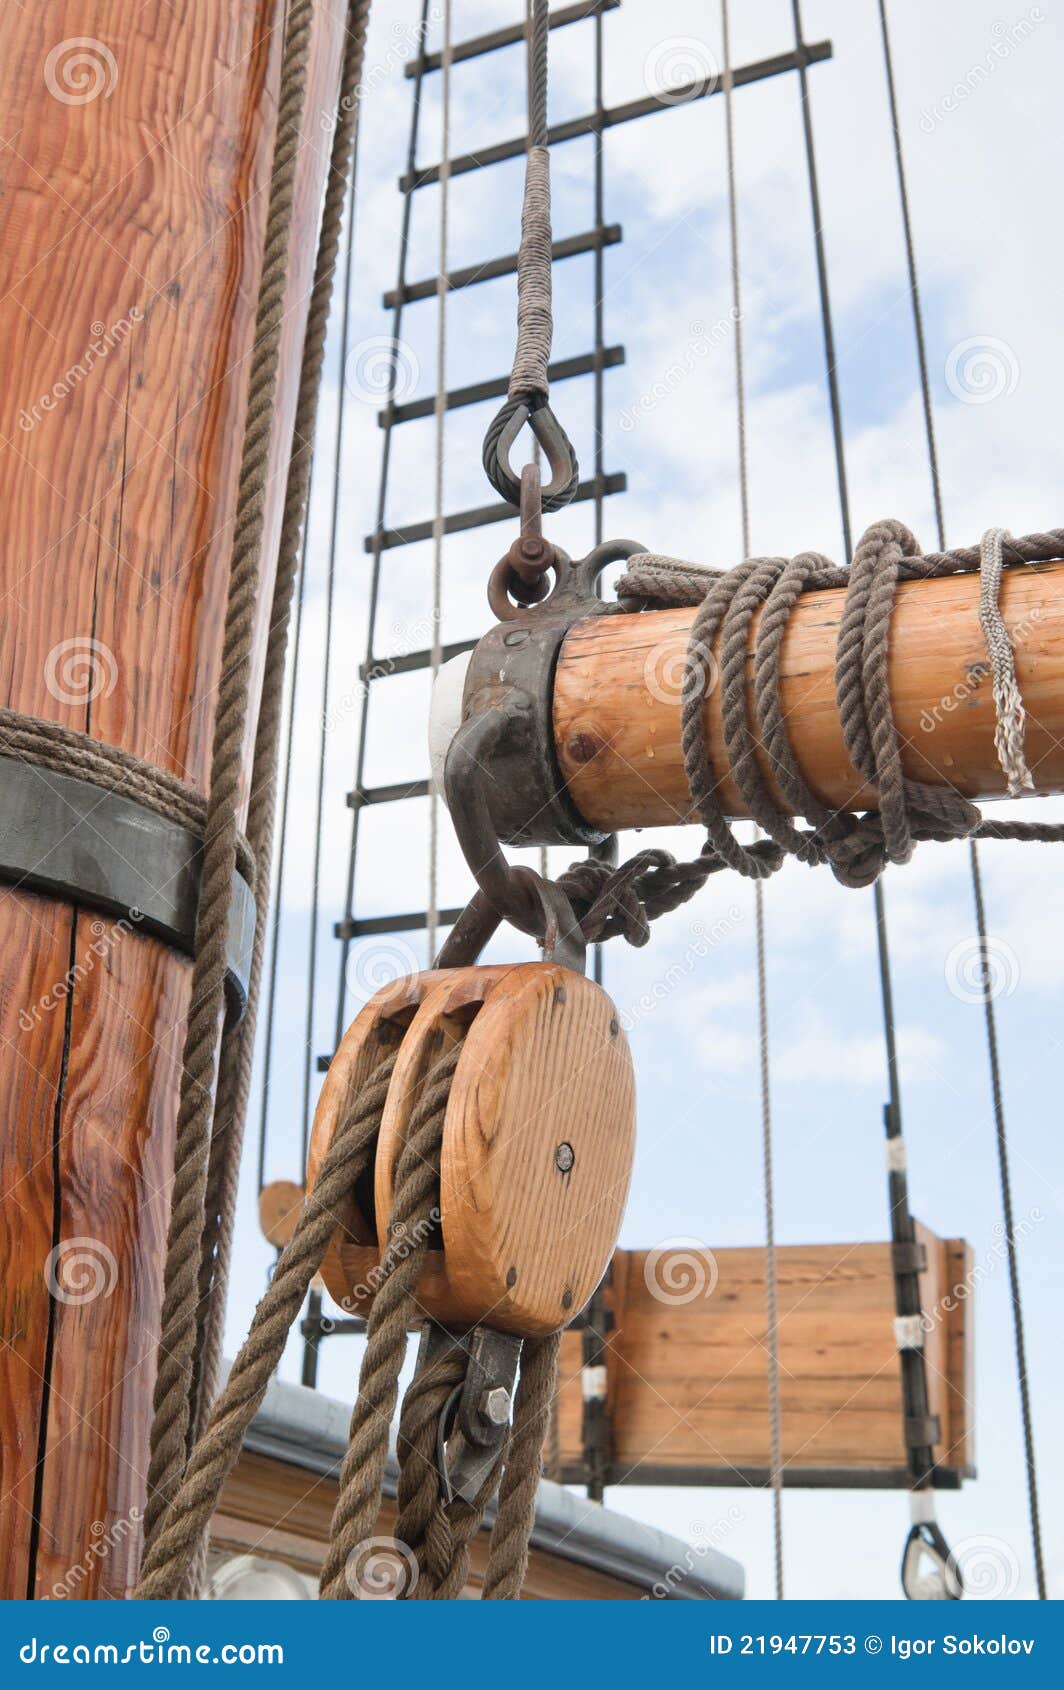 masts and sails